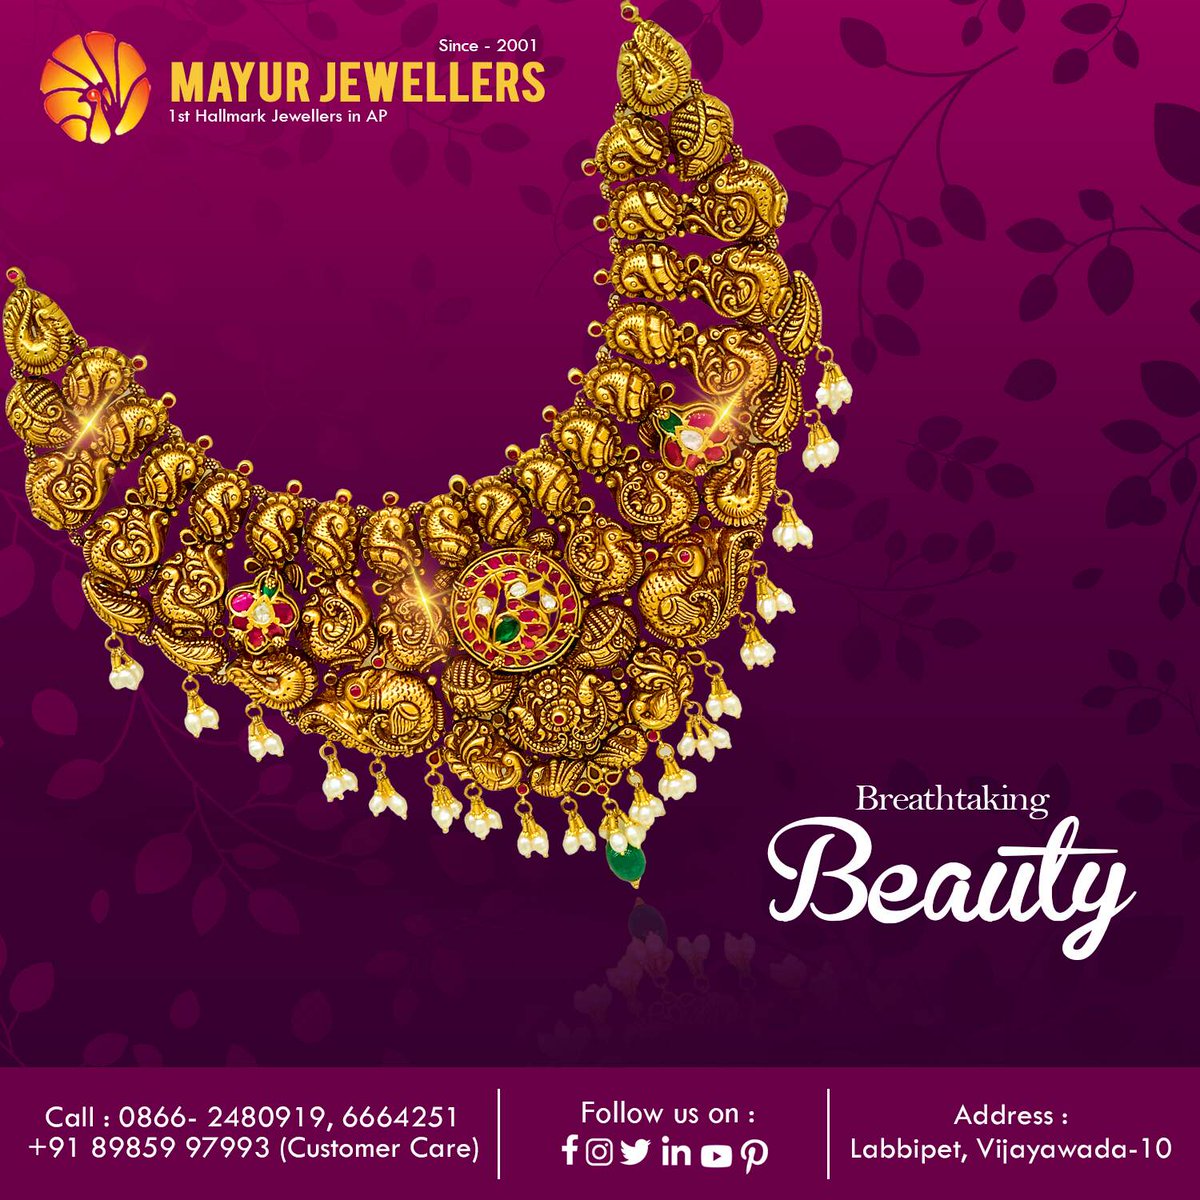 Shop Now the latest breath taking beautiful collection at Mayur Jewellers, Vijayawada.

#mayurjewellers #mayurjewellersvijayawada #goldjewellery #templejewellery #latestjewellerydesigns #goldjewelery #gold #mayur #hallmarkjewellery #hallmarkgoldjewelery